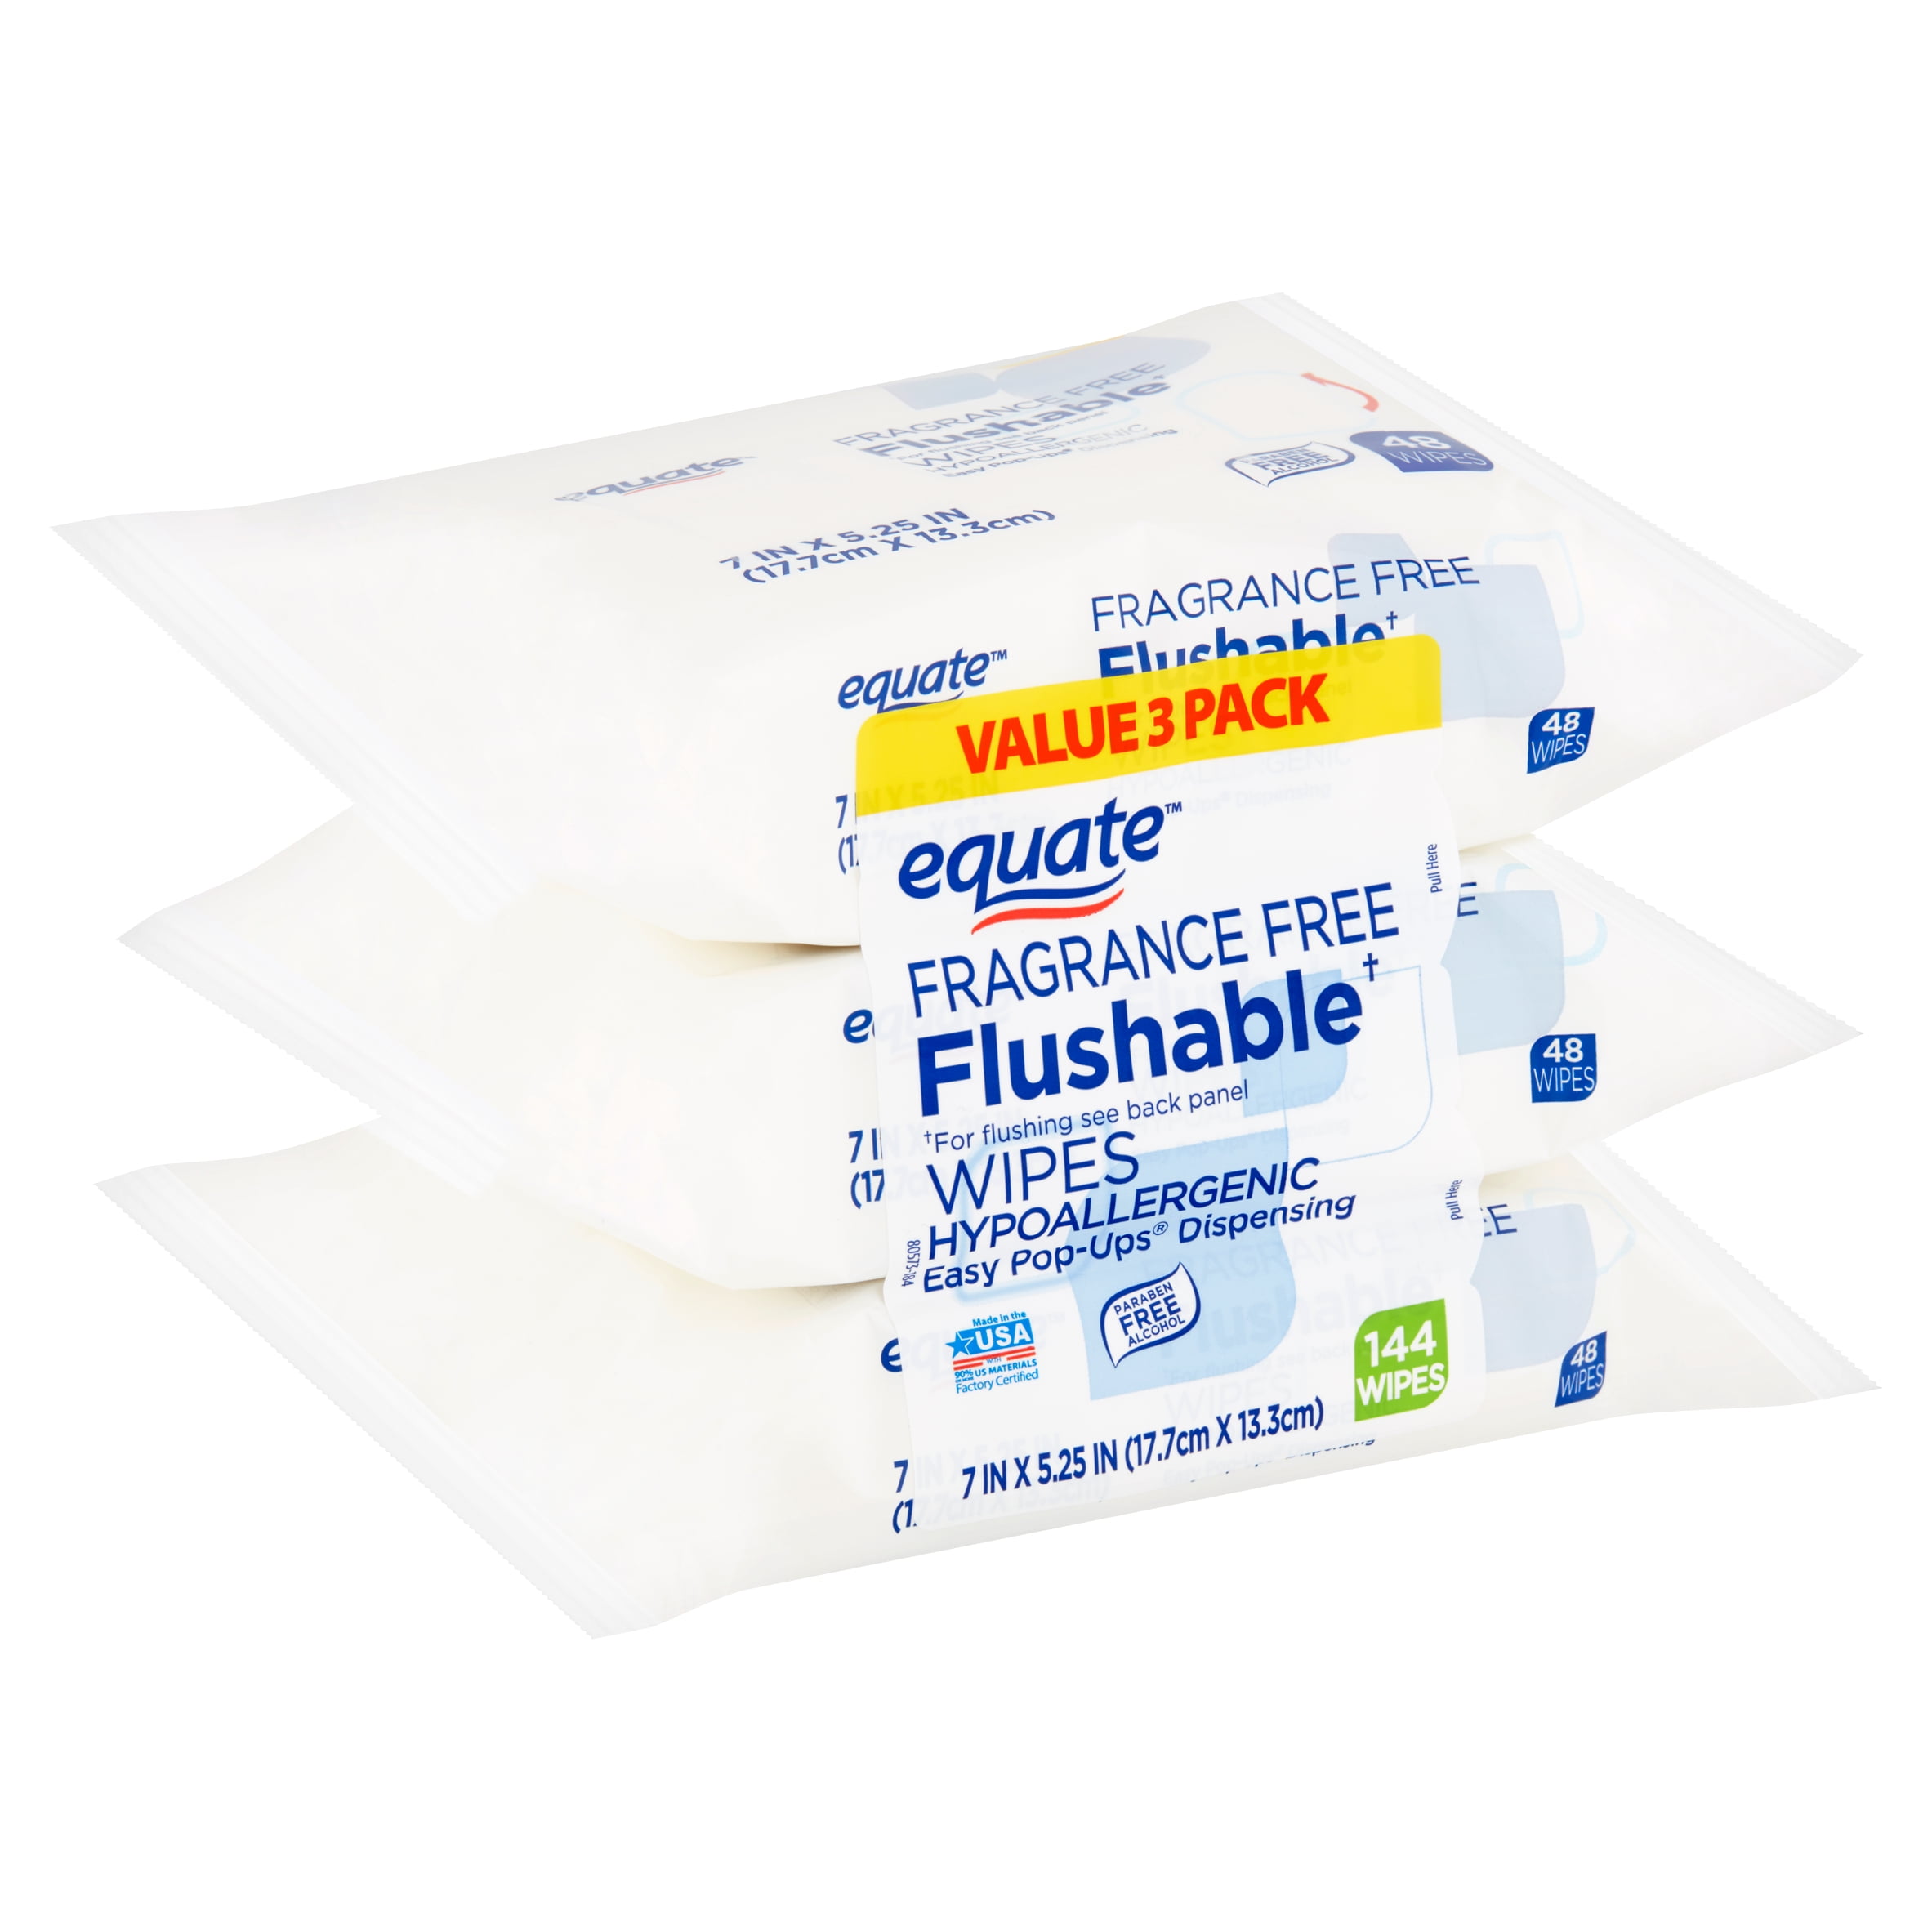 Equate Flushable Wipes Fragrance Free Value 3 Pack 144 Total Wipes Walmart Com